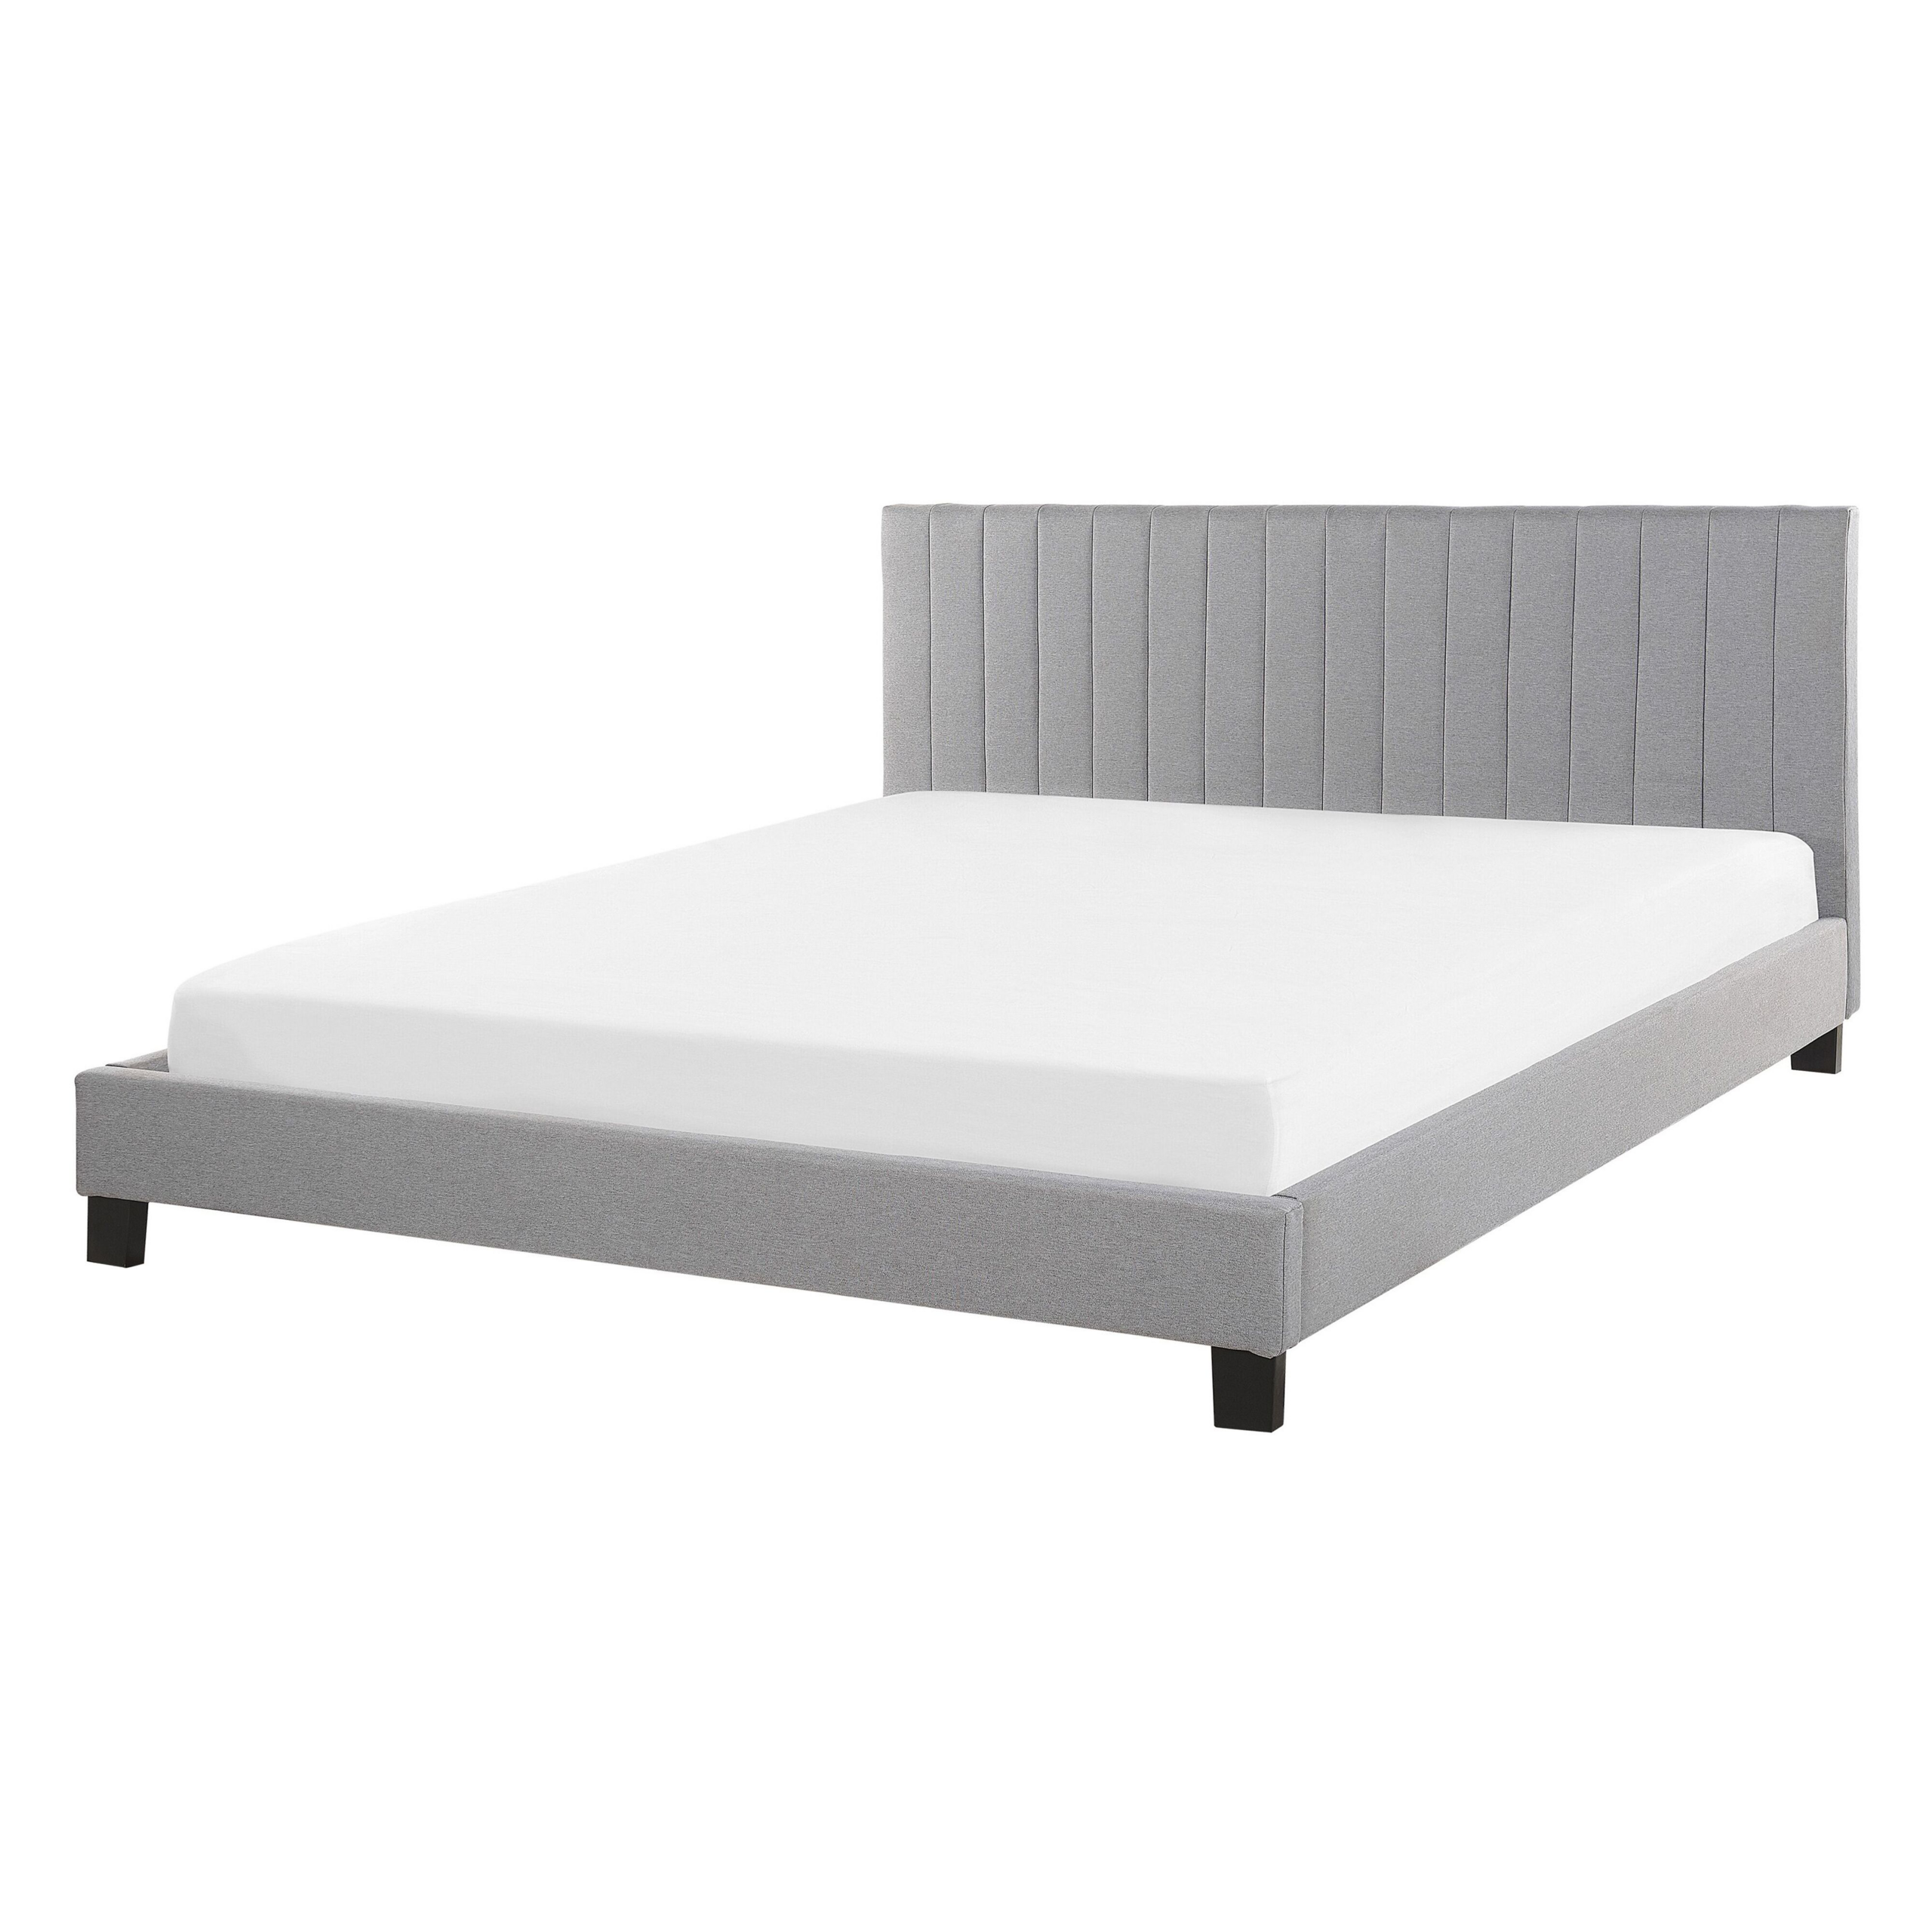 Beliani Panel Bed Light Grey Fabric Upholstery EU Double Size 4ft6 with Slatted Base Headboard